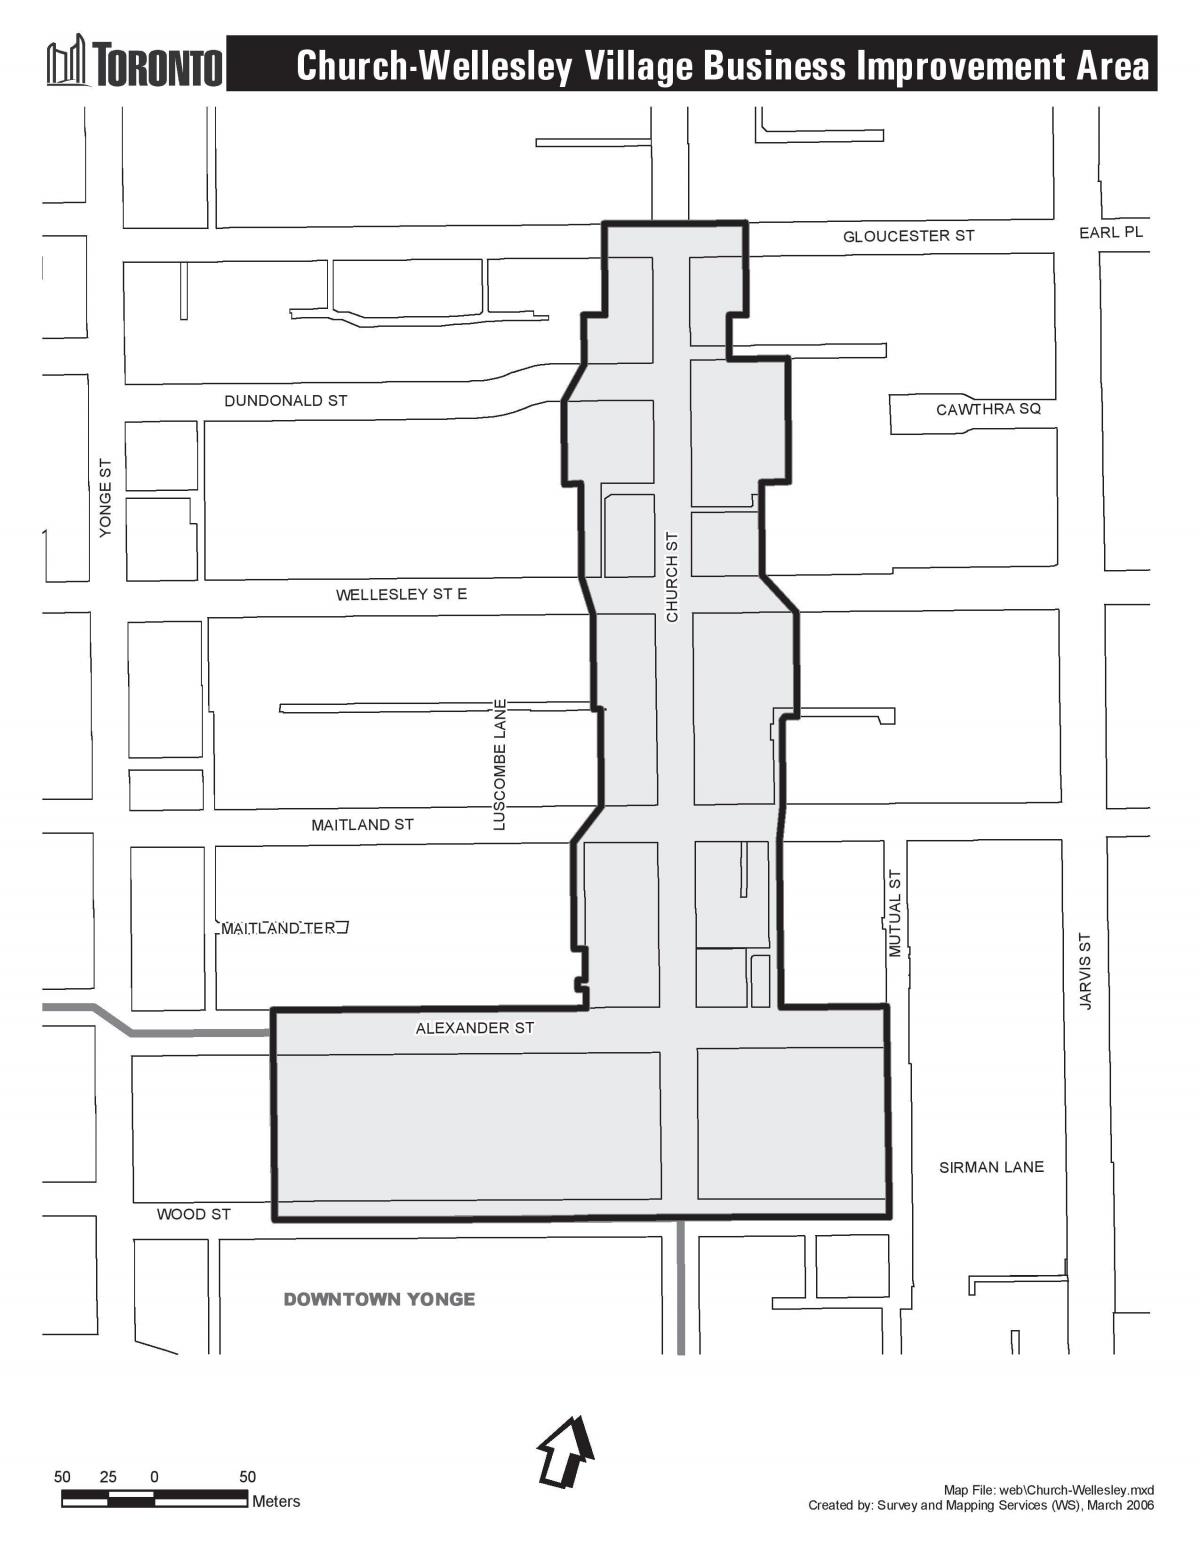 Карта на Црквата-Wellesley Село бизнис Подобрување Област Торонто